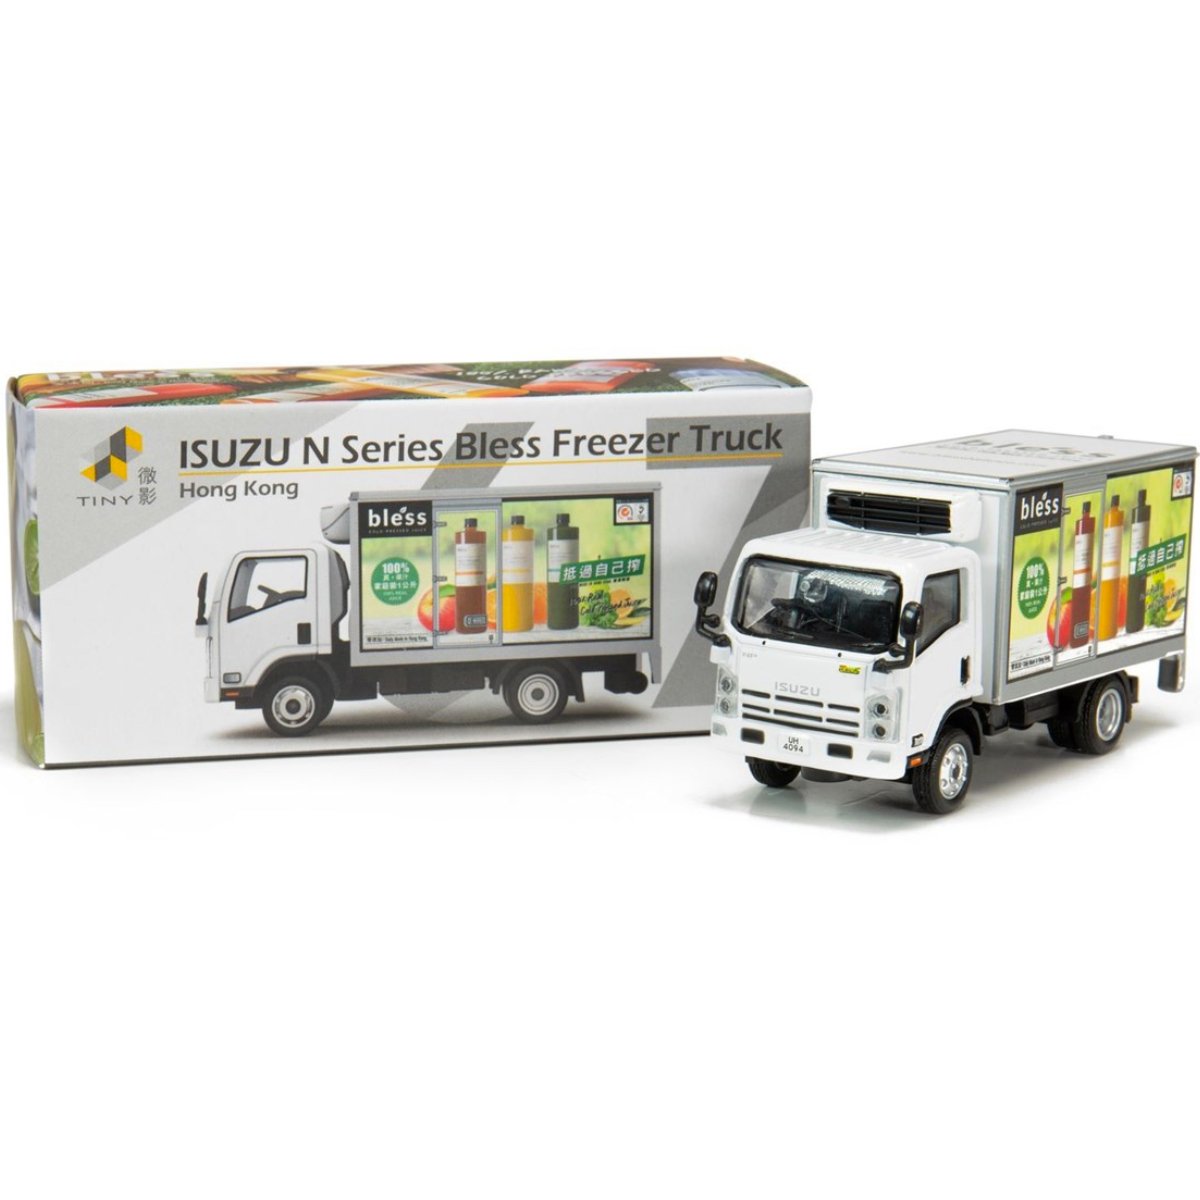 Tiny Models Isuzu N Series Bless Freezer Truck (1:76 Scale) - Phillips Hobbies